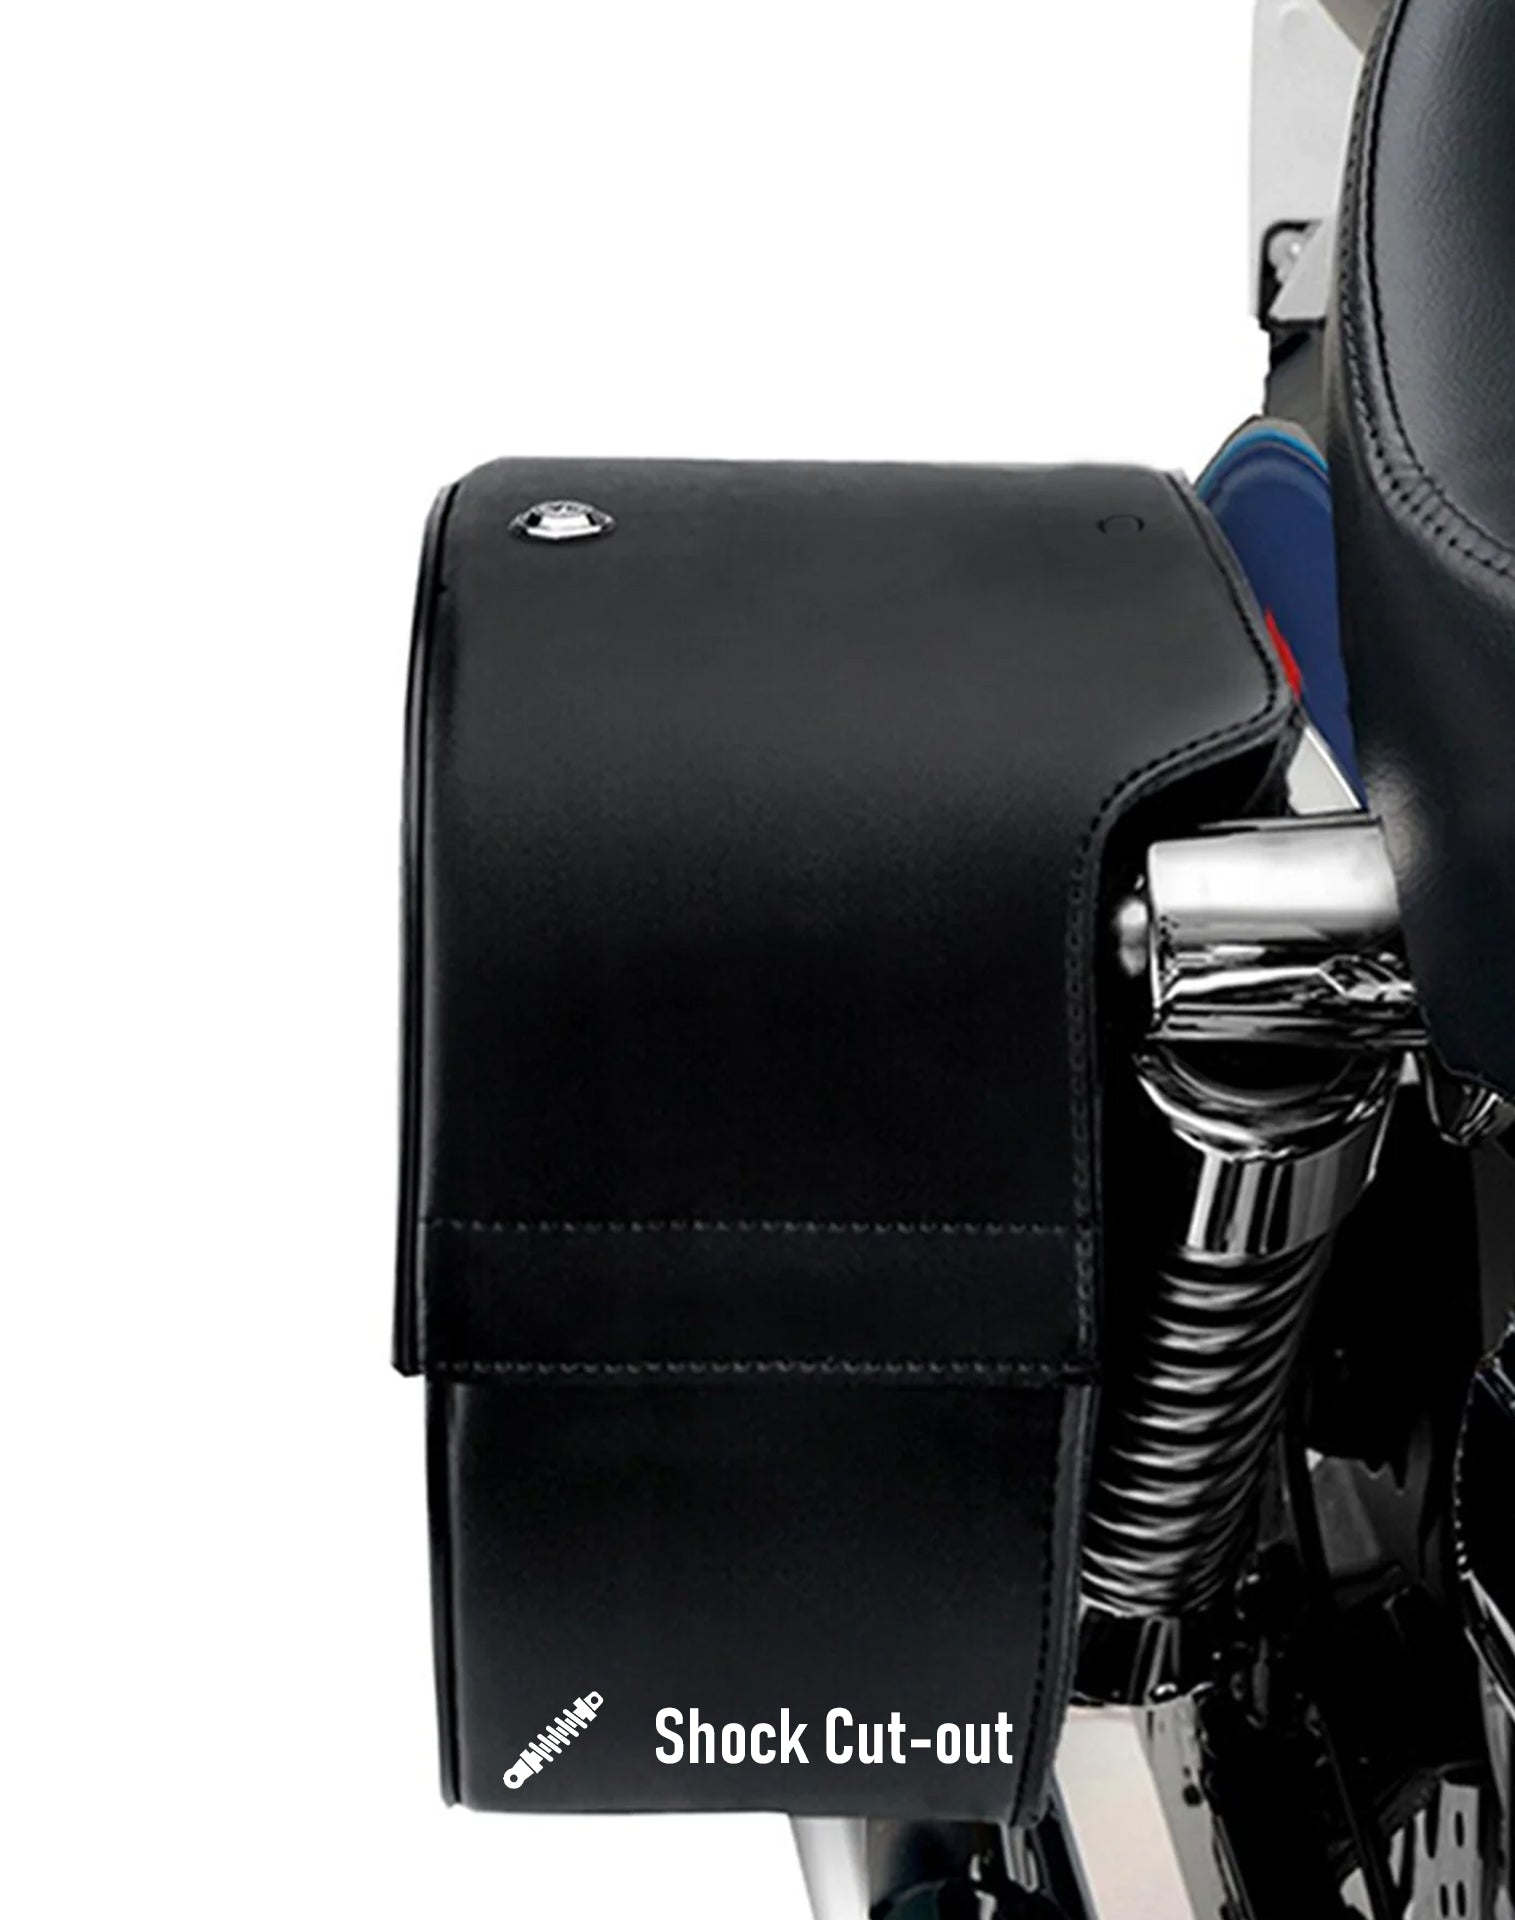 Viking Skarner Large Shock Cut Out Leather Motorcycle Saddlebags For Harley Street 750 Hard Shell Construction